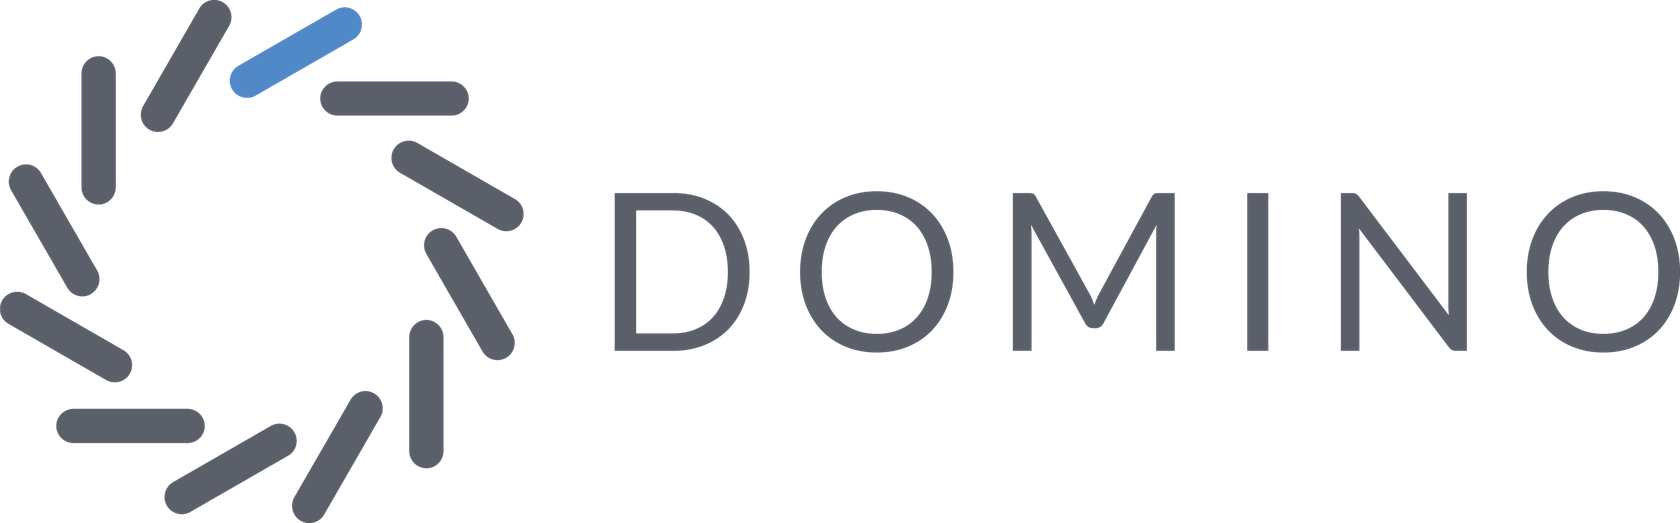 domino_logo.png